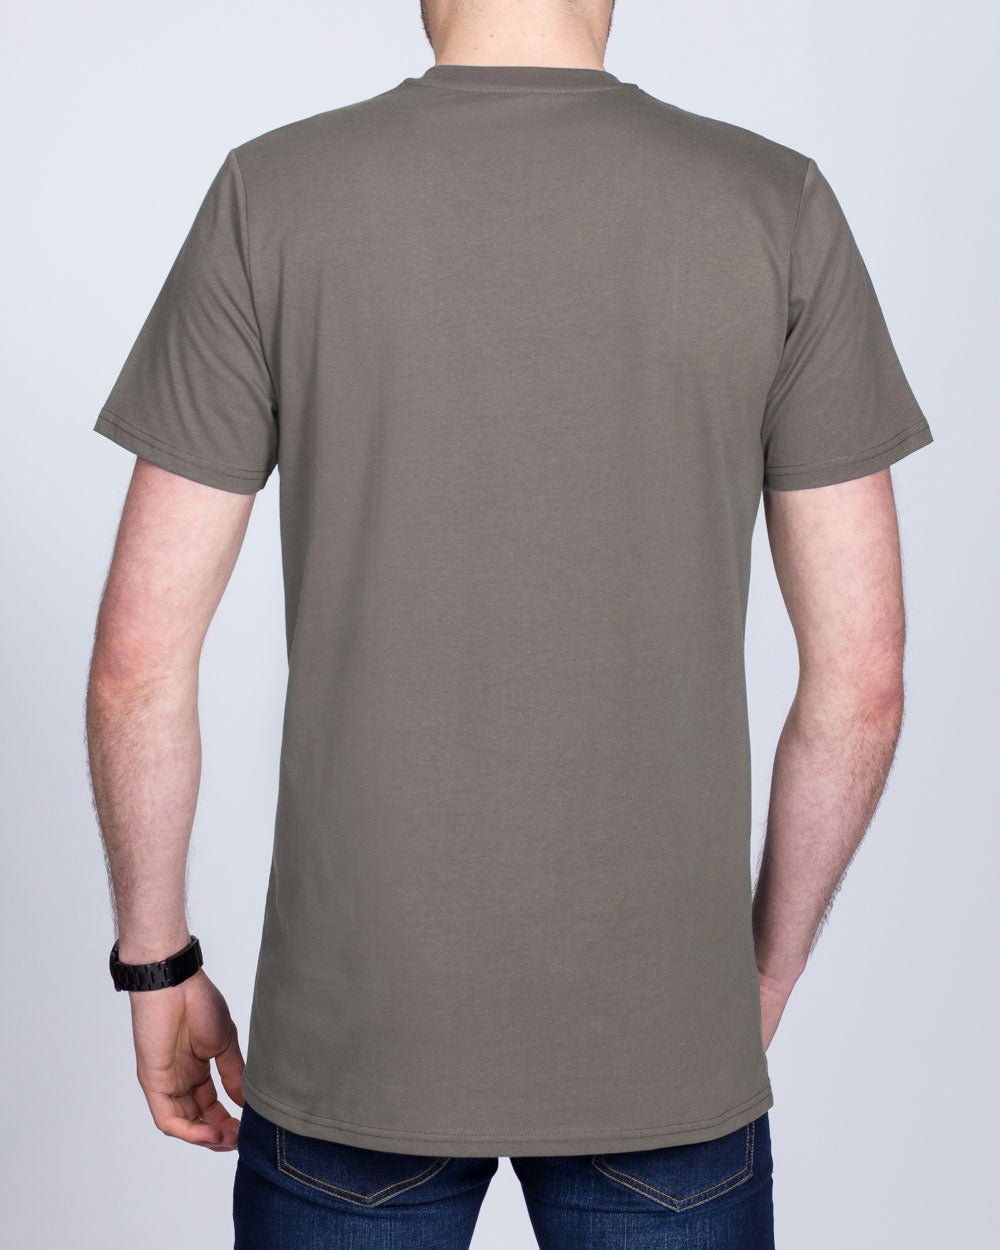 Girav Sydney Extra Tall T-Shirt (taupe)